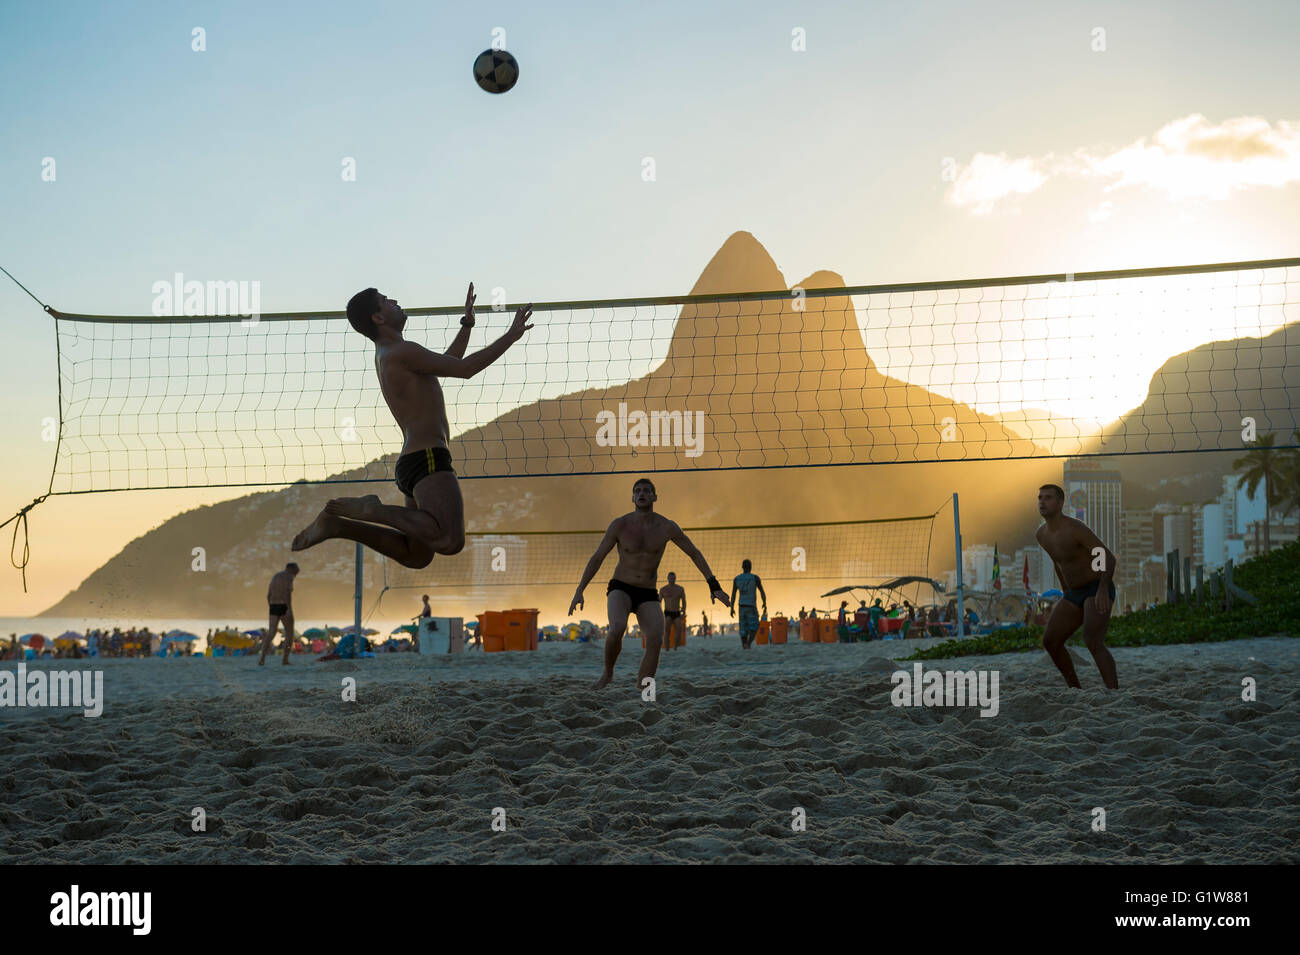 RIO DE JANEIRO - MARCH 27, 2016: Brazilians play beach futevôlei (footvolley, a sport combining football/soccer and volleyball). Stock Photo